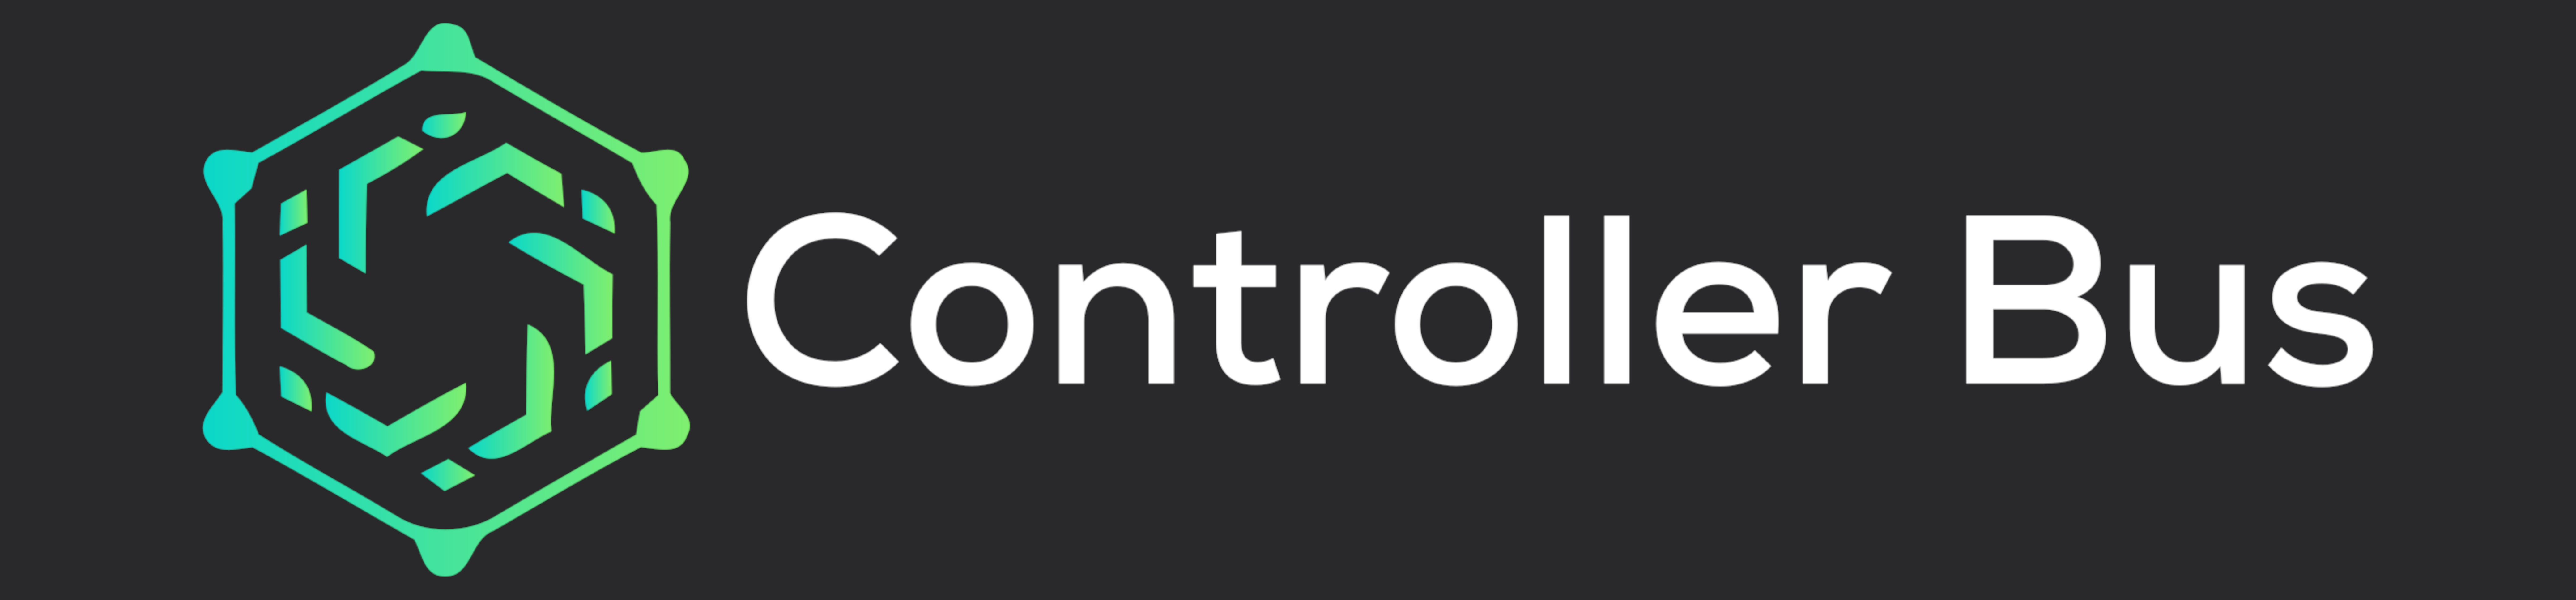 controller-bus-logo.png